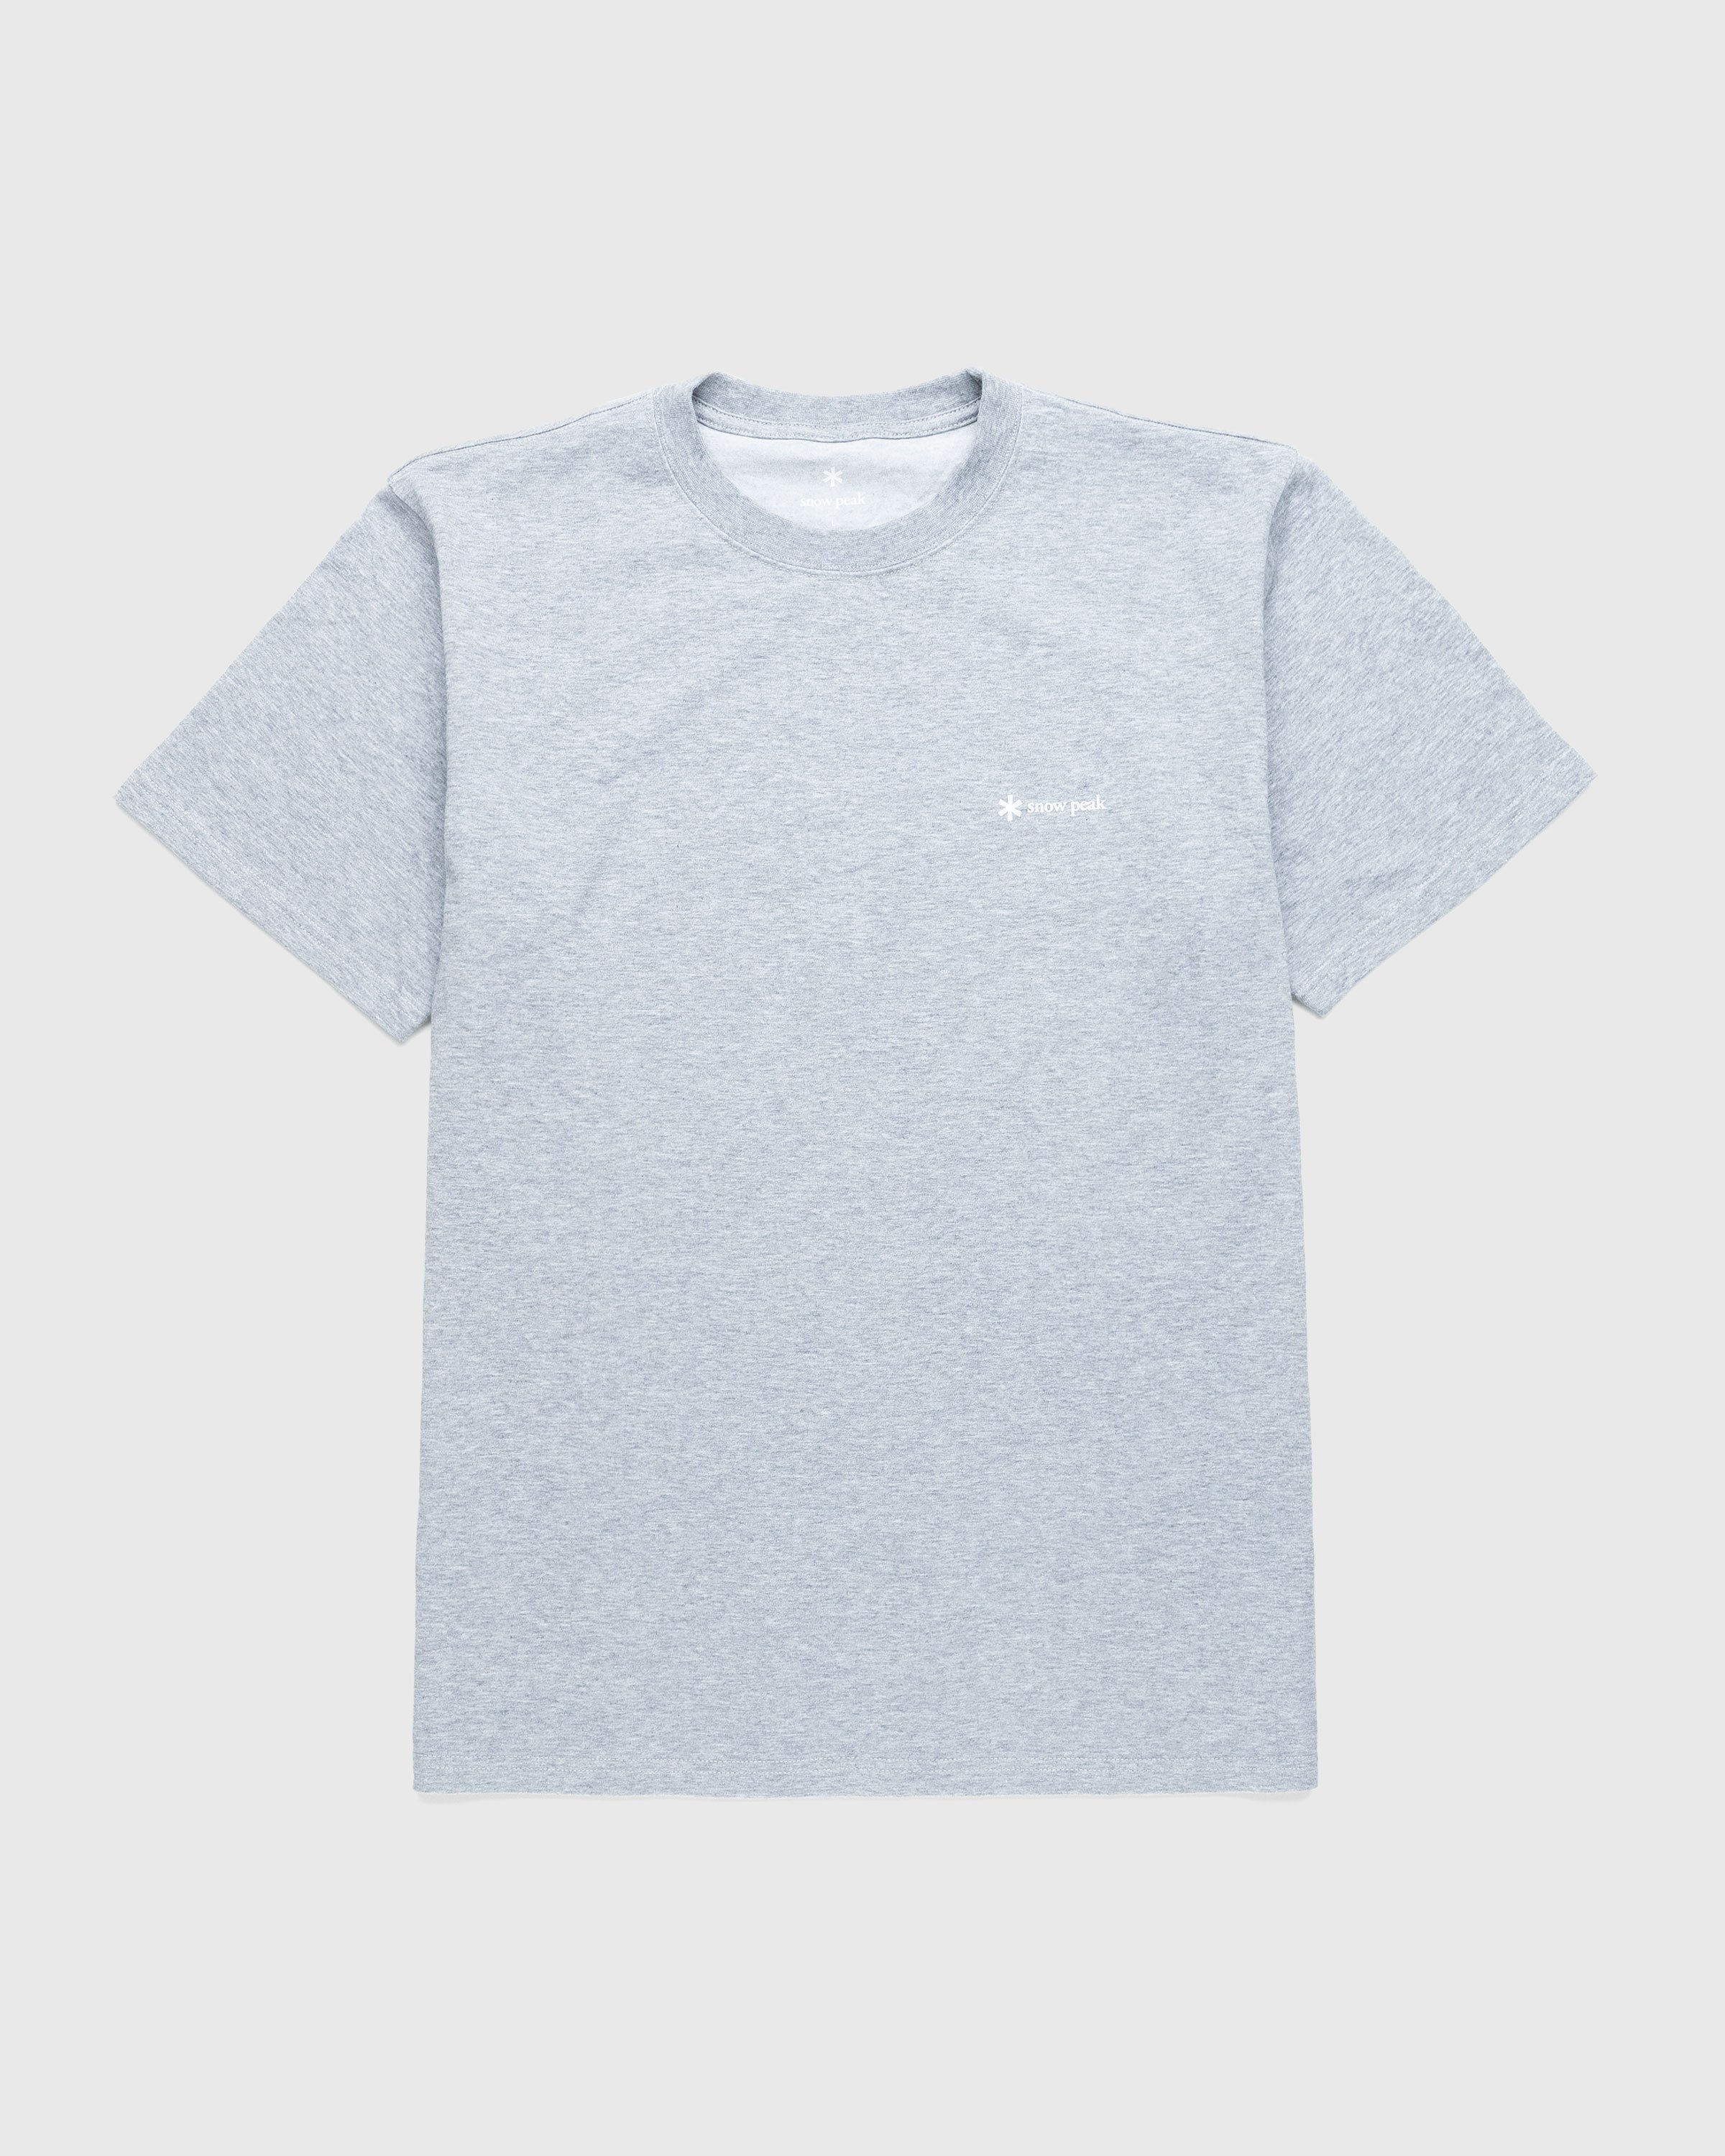 Snow Peak - SP Logo T Shirt Grey - Clothing - Grey - Image 1